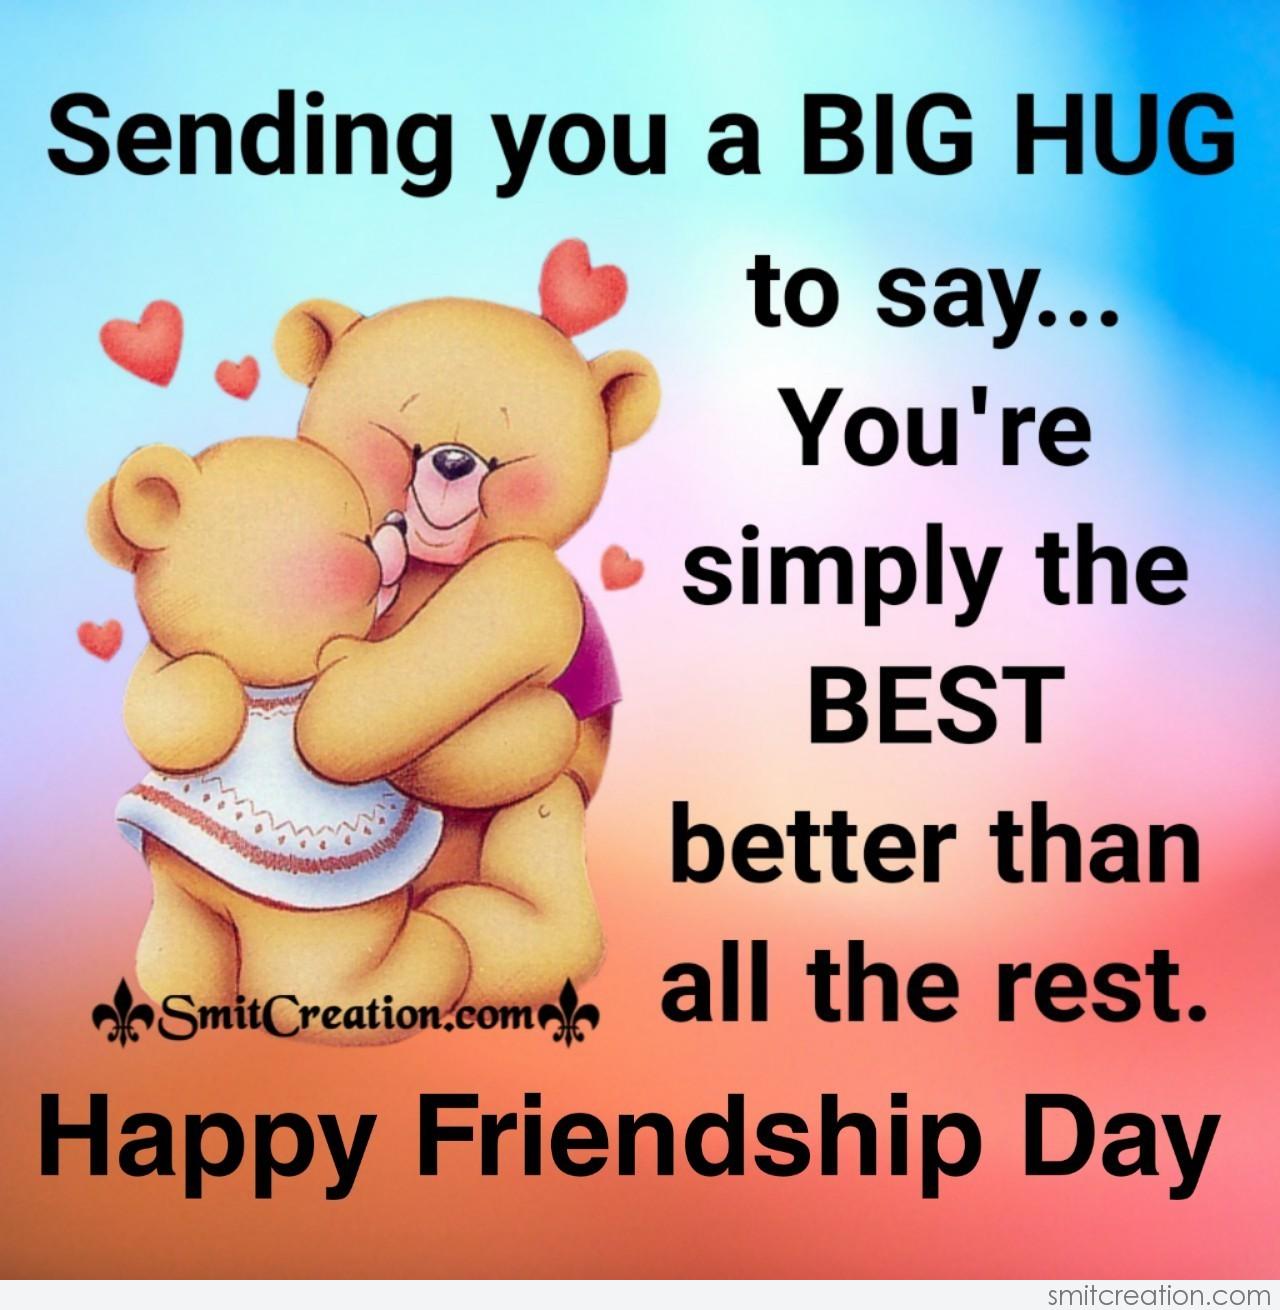 Happy Friendship Day Sending Big Hug - SmitCreation.com